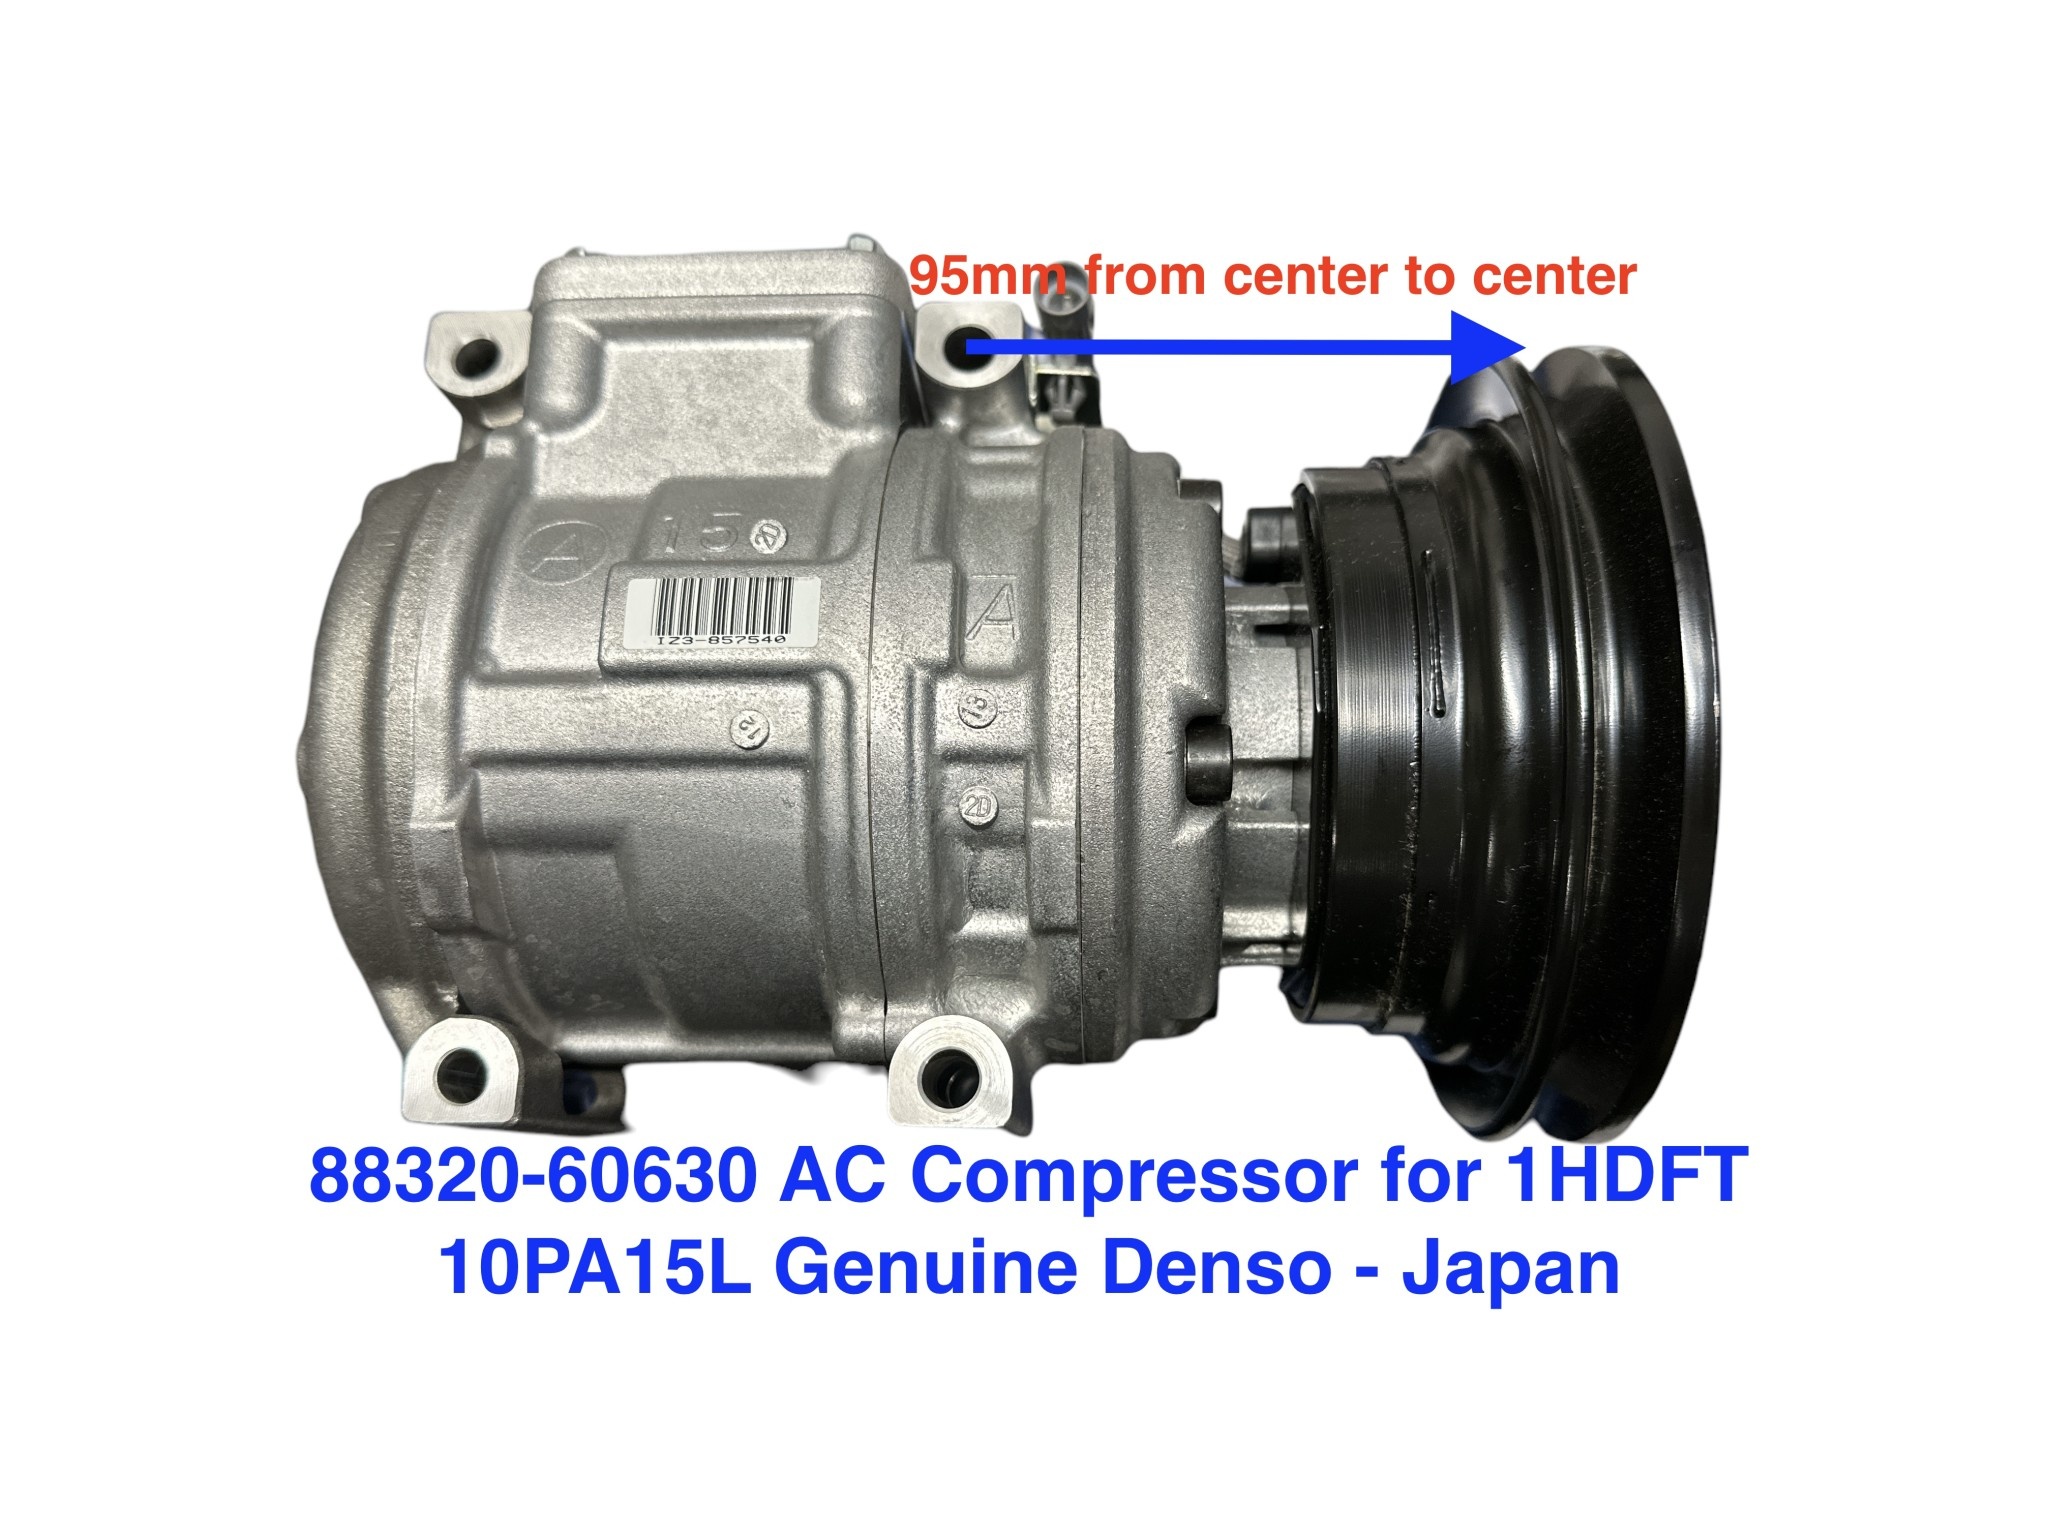 AC Compressor, Denso 10PA15L - for Land Cruiser HDJ80 & HDJ81 with 1HDFT engine - 88320-60630